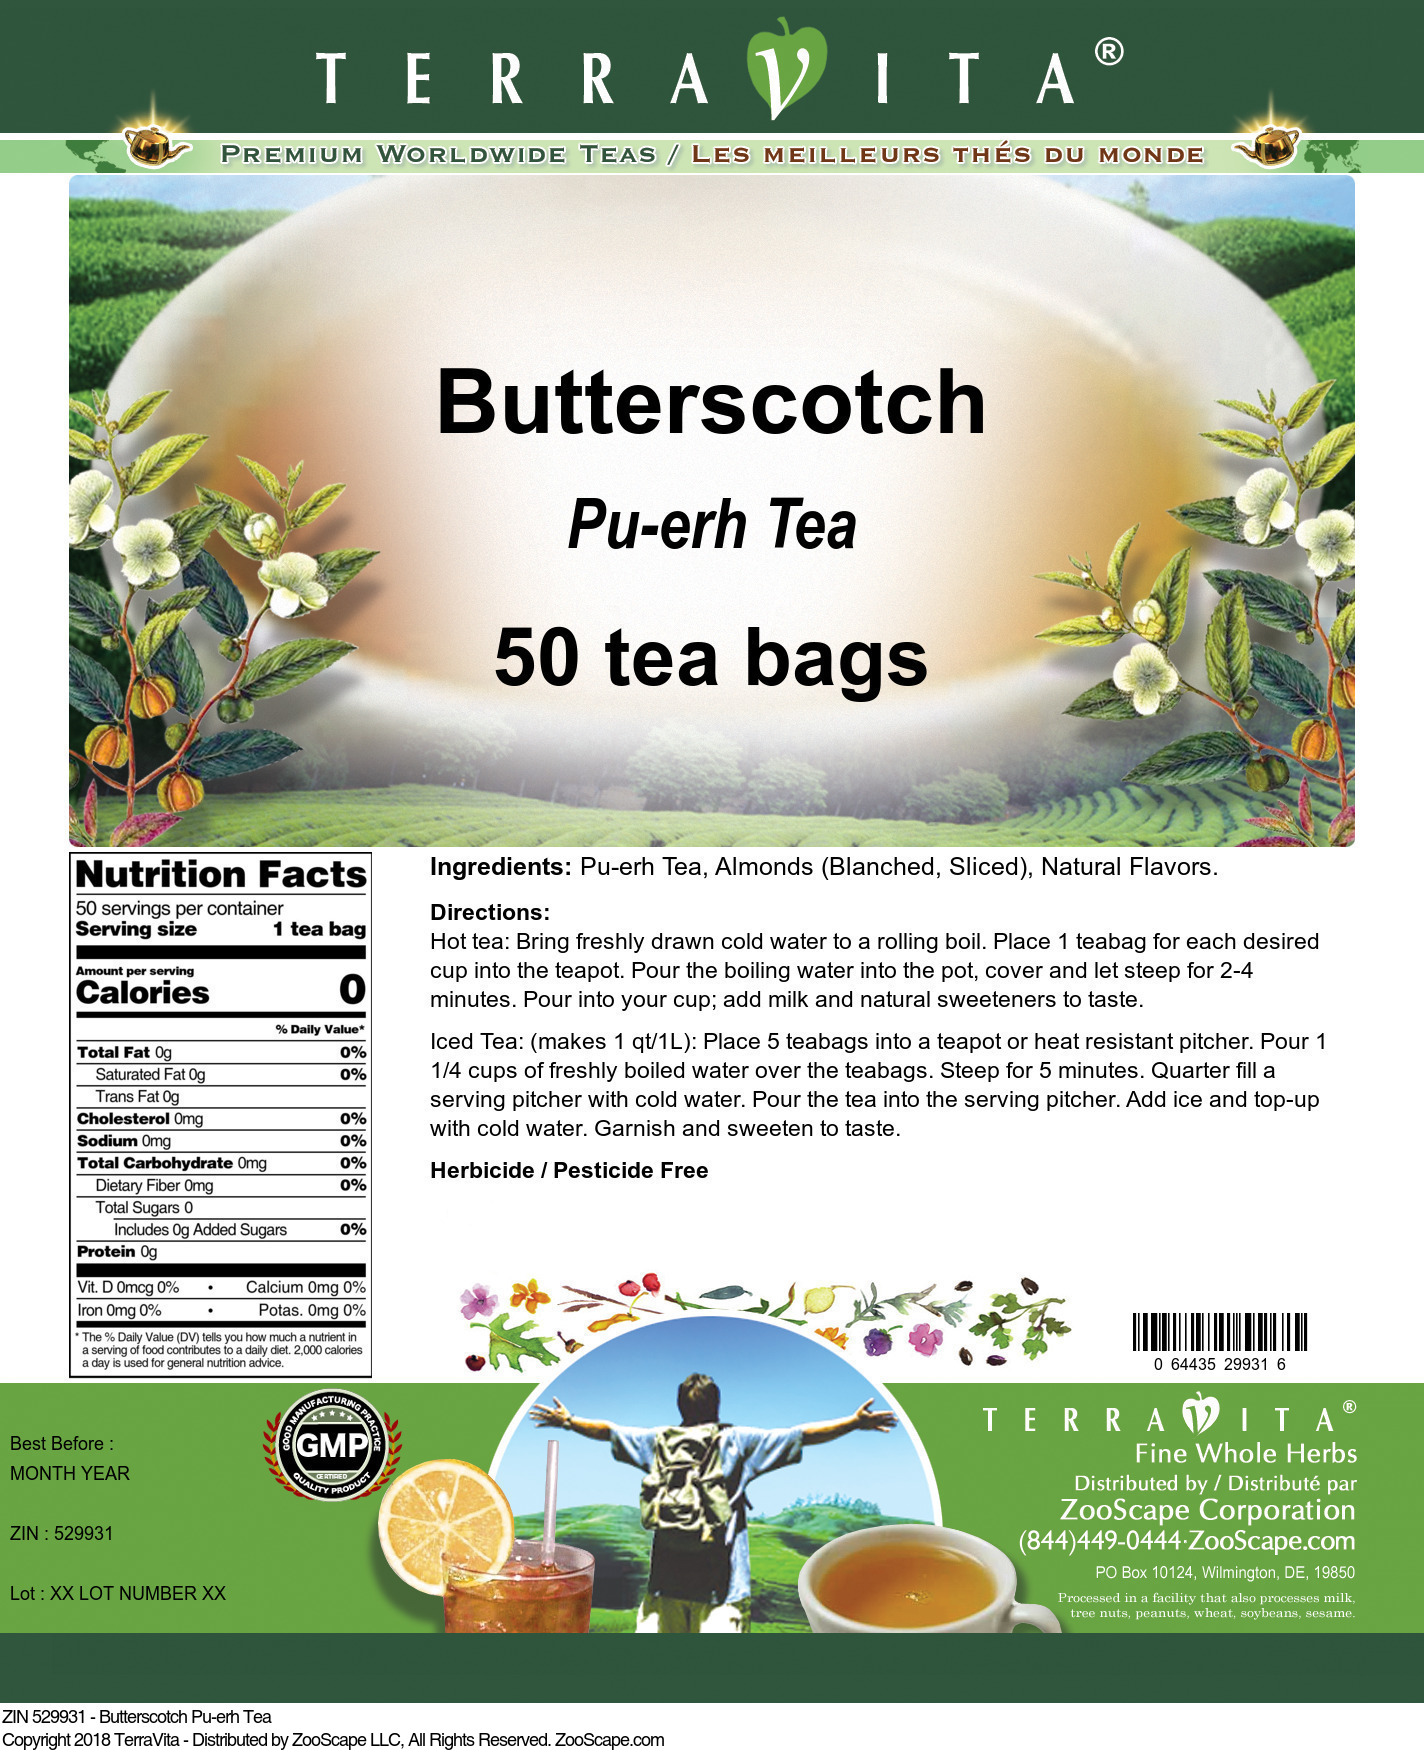 Butterscotch Pu-erh Tea - Label